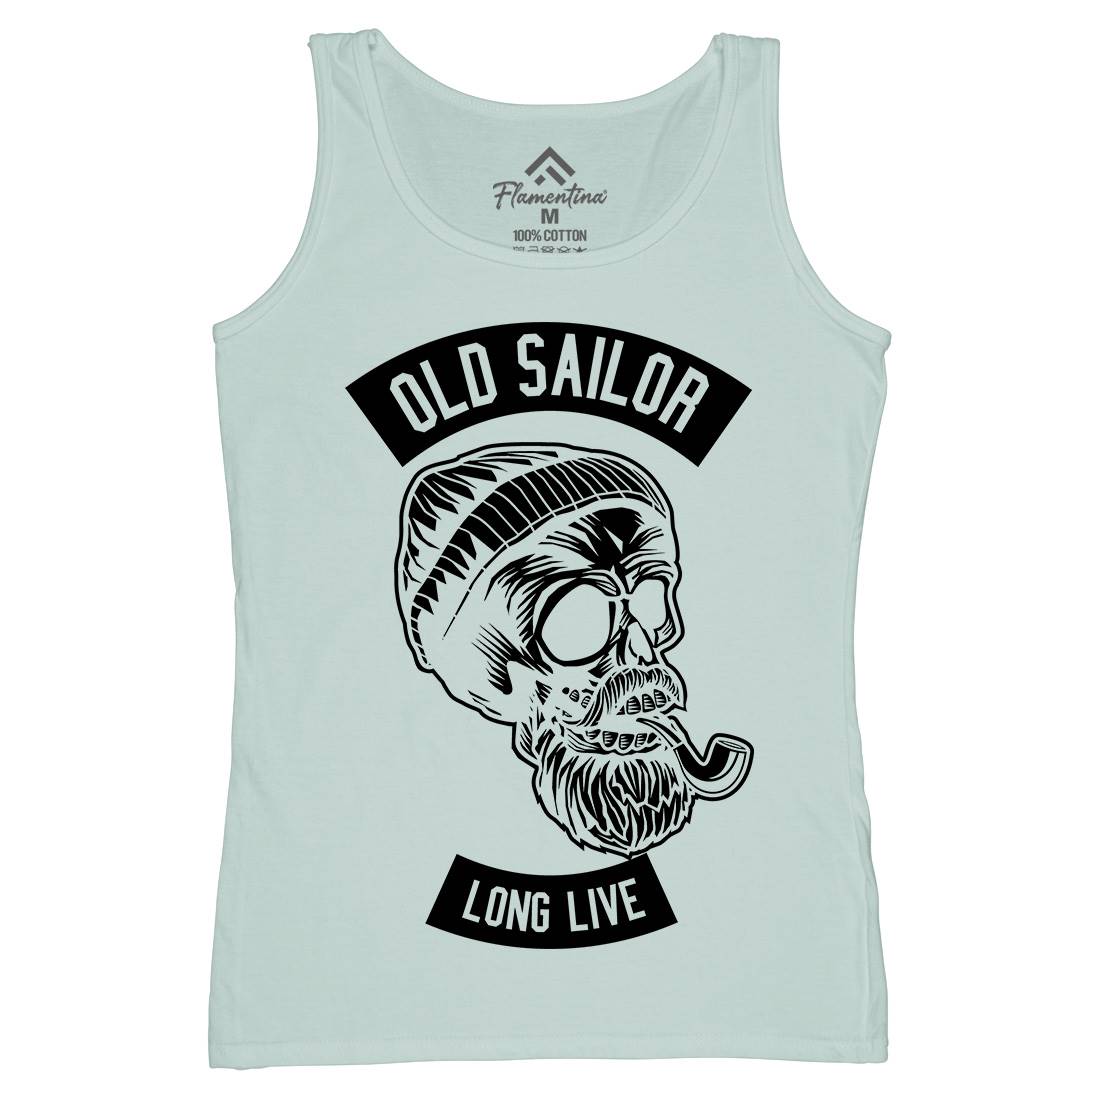 Old Sailor Womens Organic Tank Top Vest Navy B590